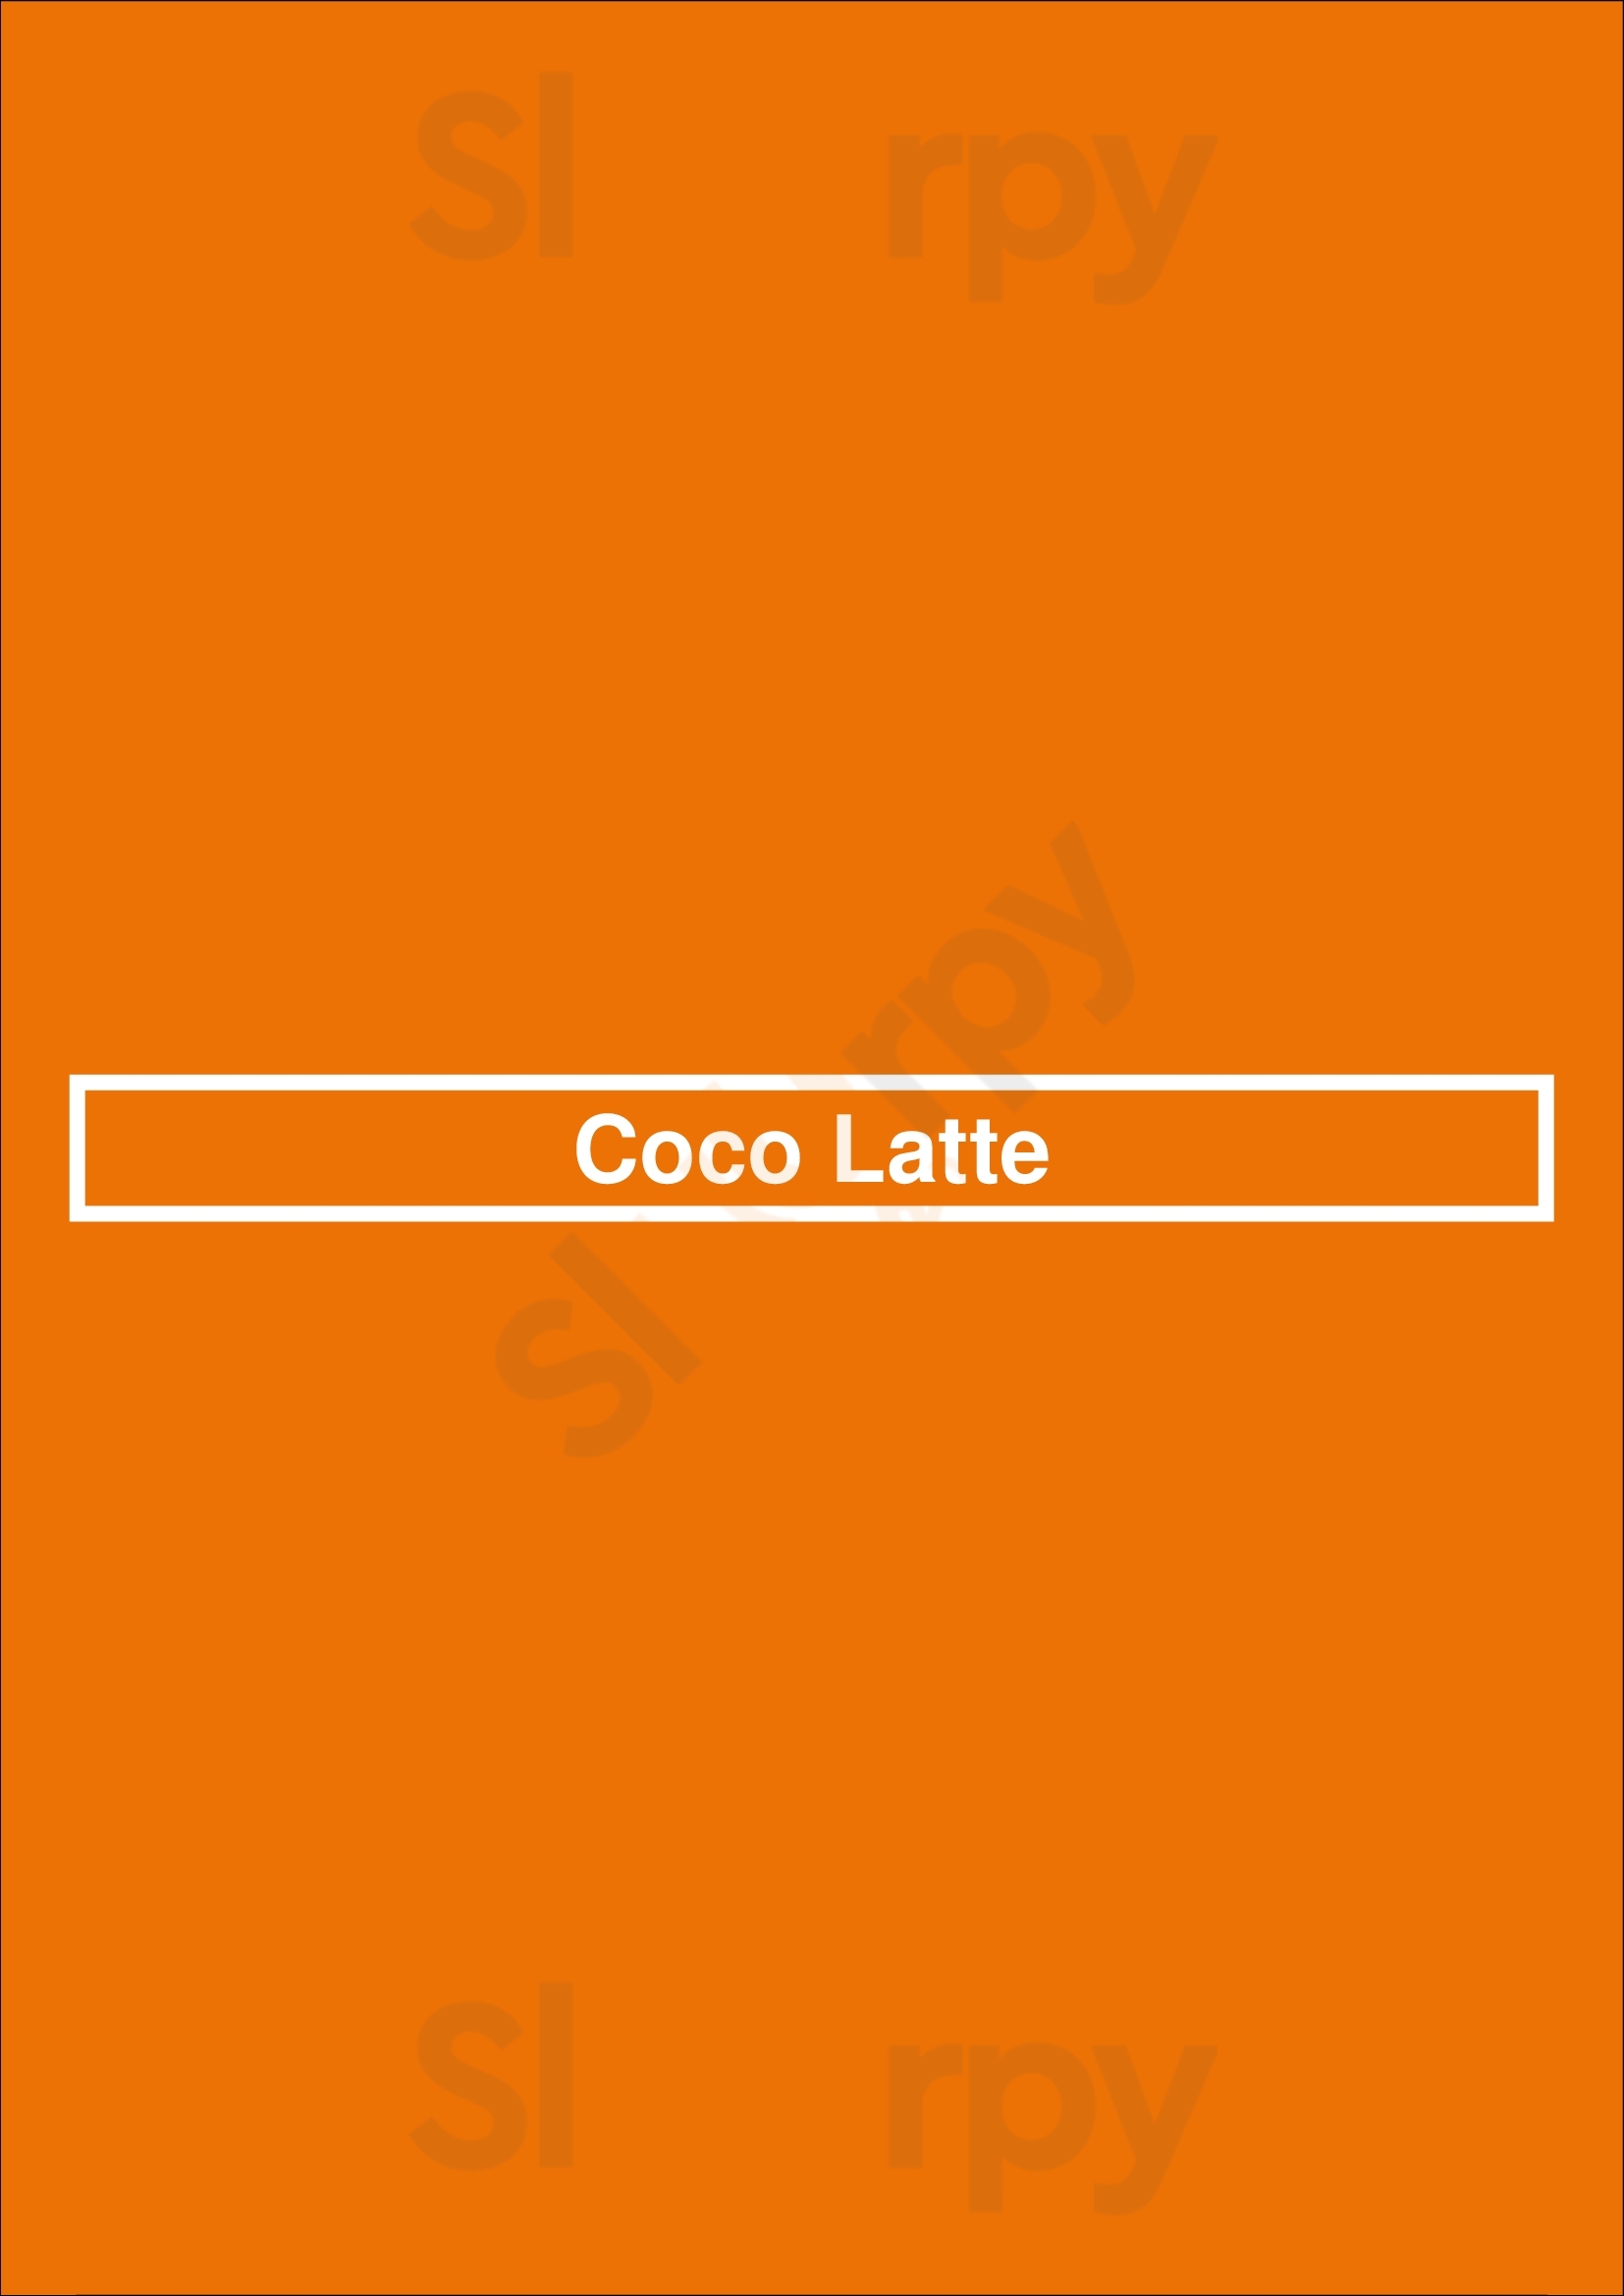 Coco Latte Guelph Menu - 1